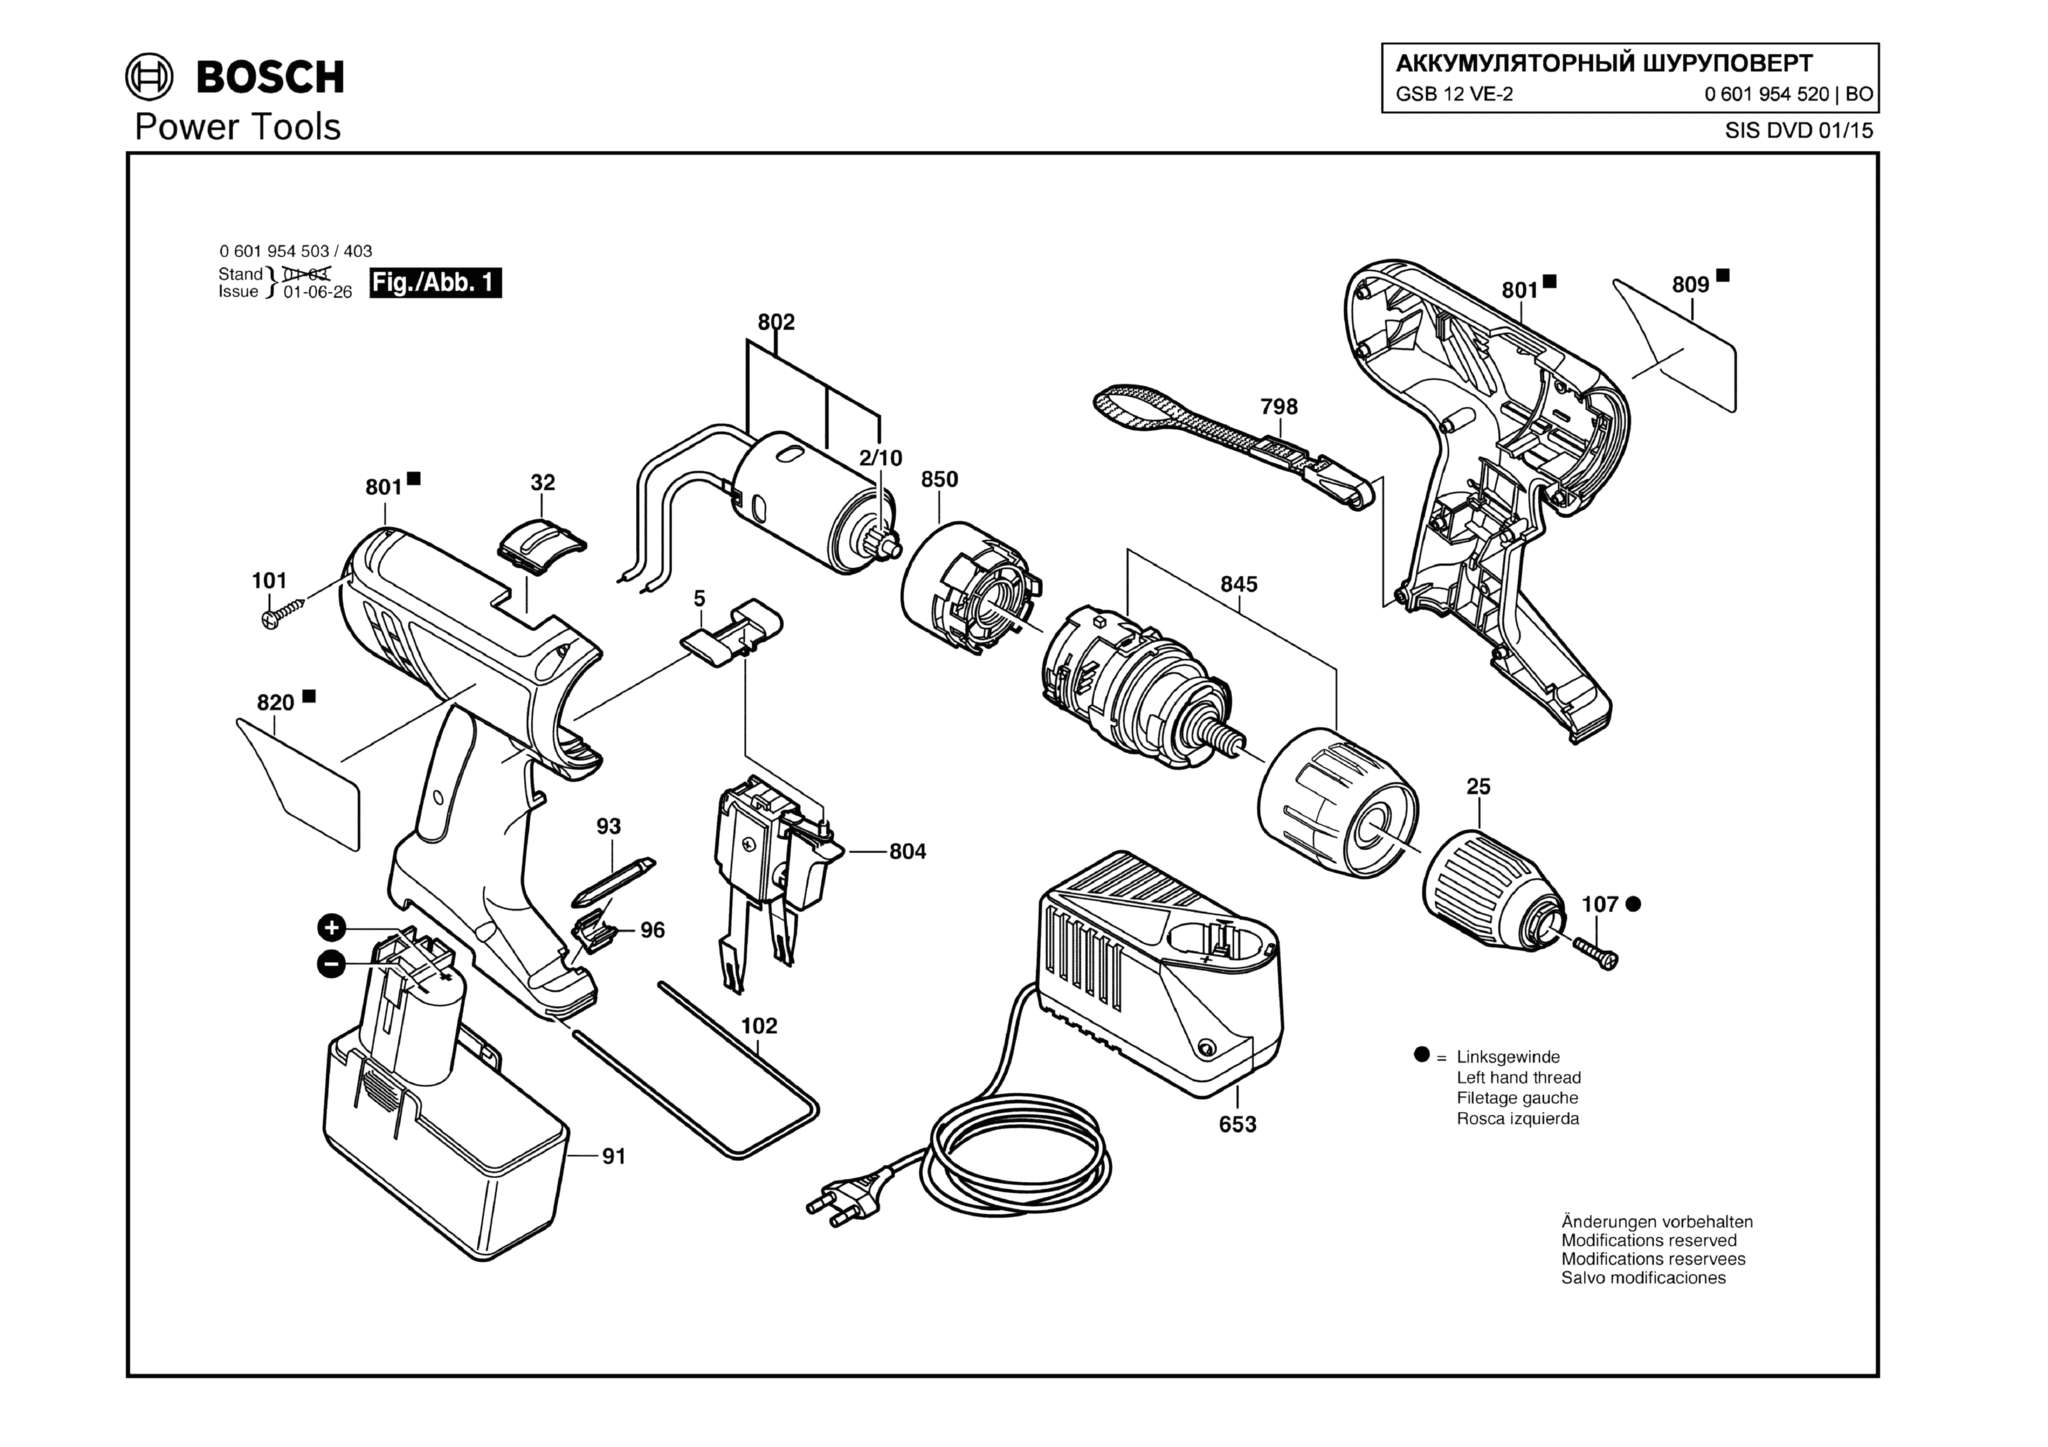 Запчасти, схема и деталировка Bosch GSB 12 VE-2 (ТИП 0601954520)